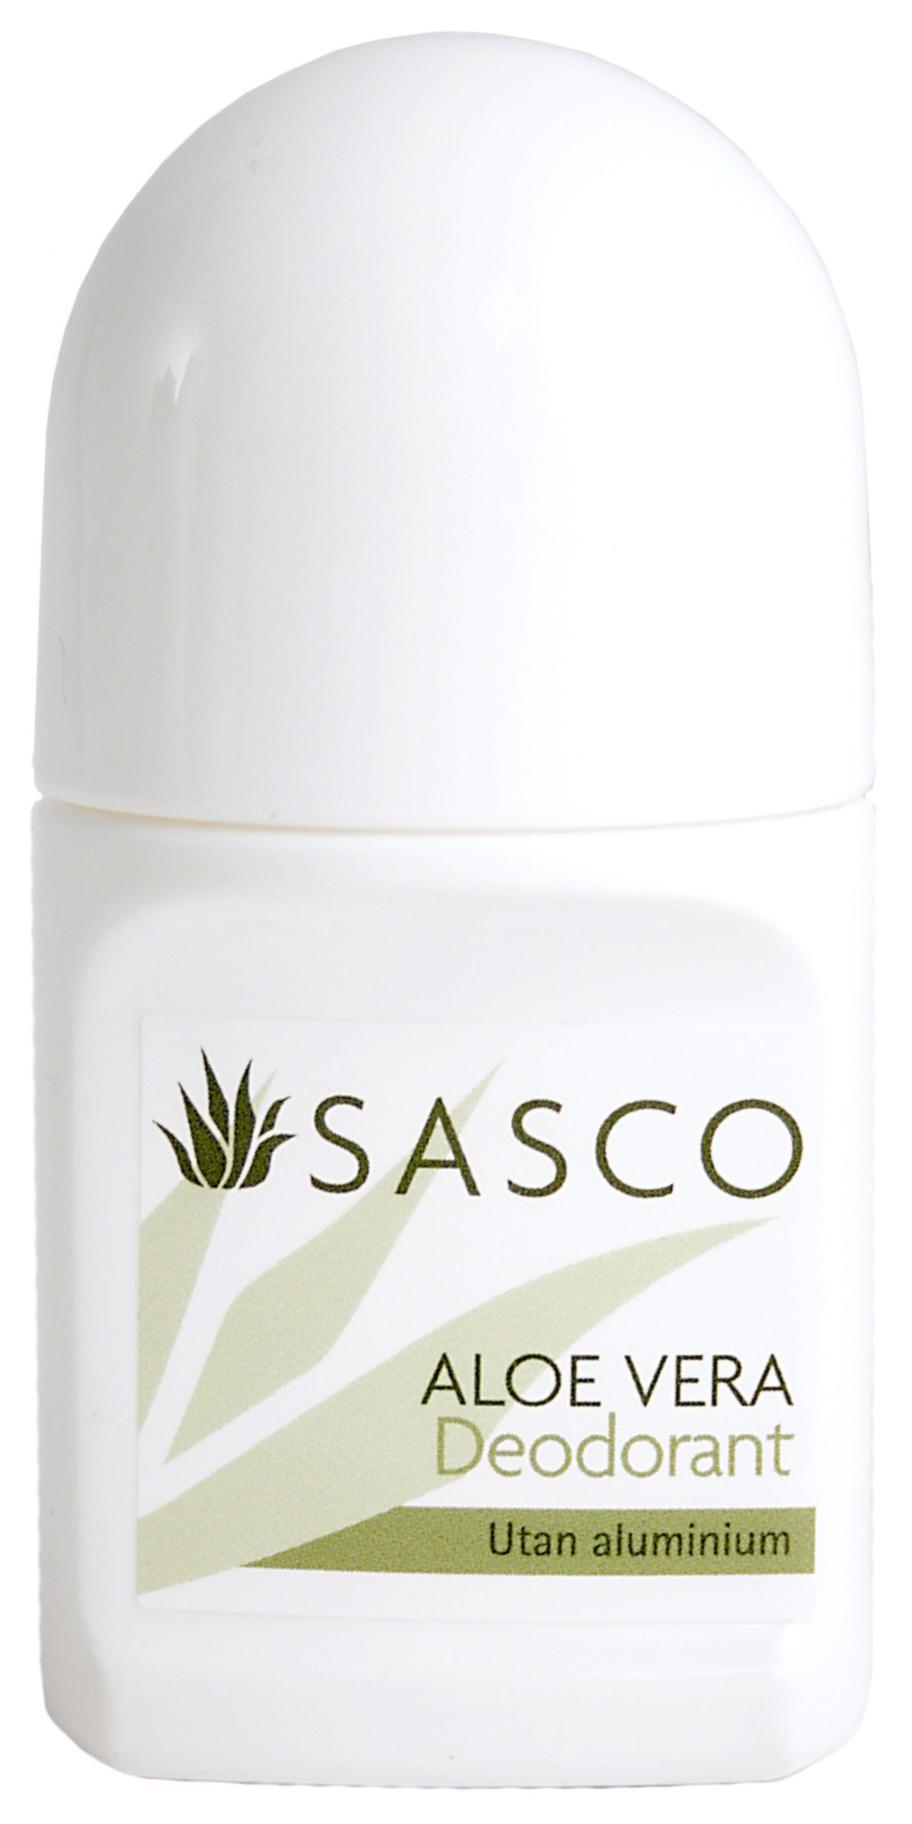 Sasco Aloe Vera Deodorant